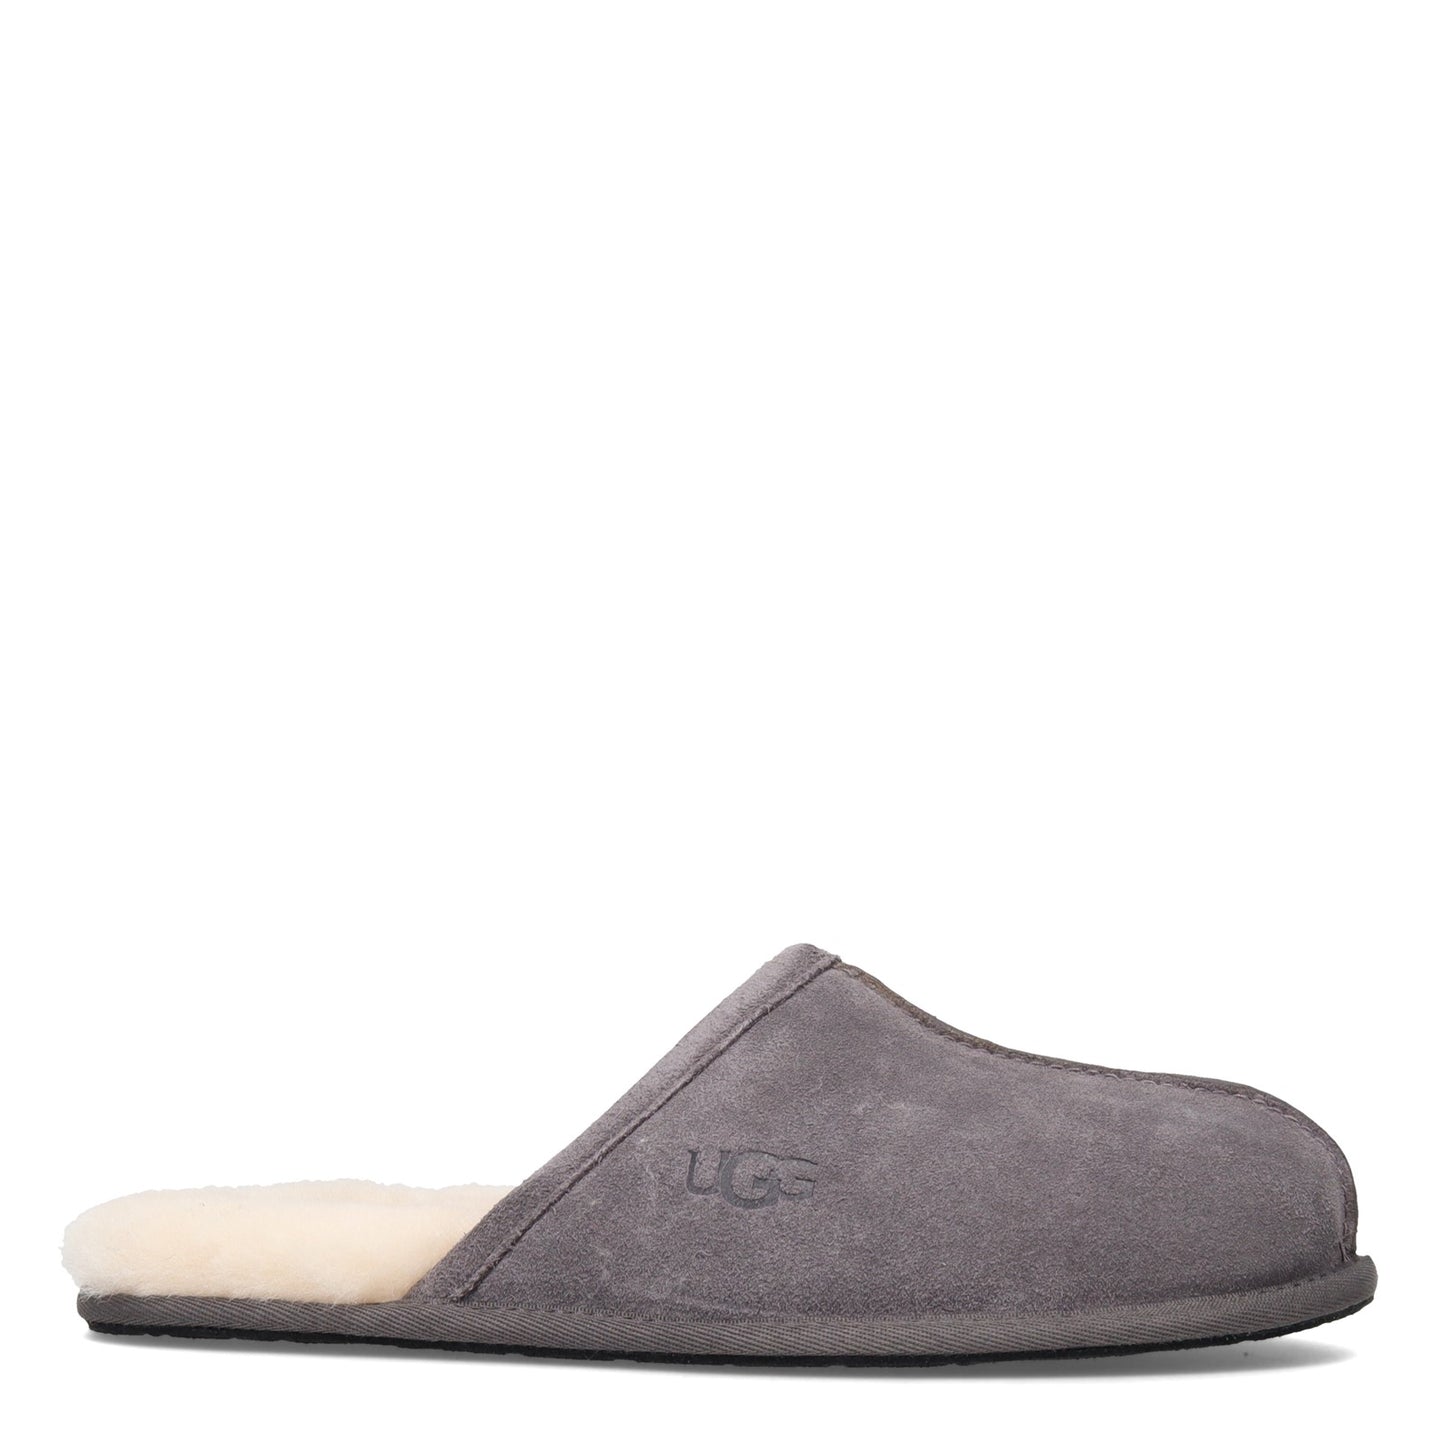 Peltz Shoes  Men's Ugg Scuff Slipper Dark Grey 1101111-DGRY